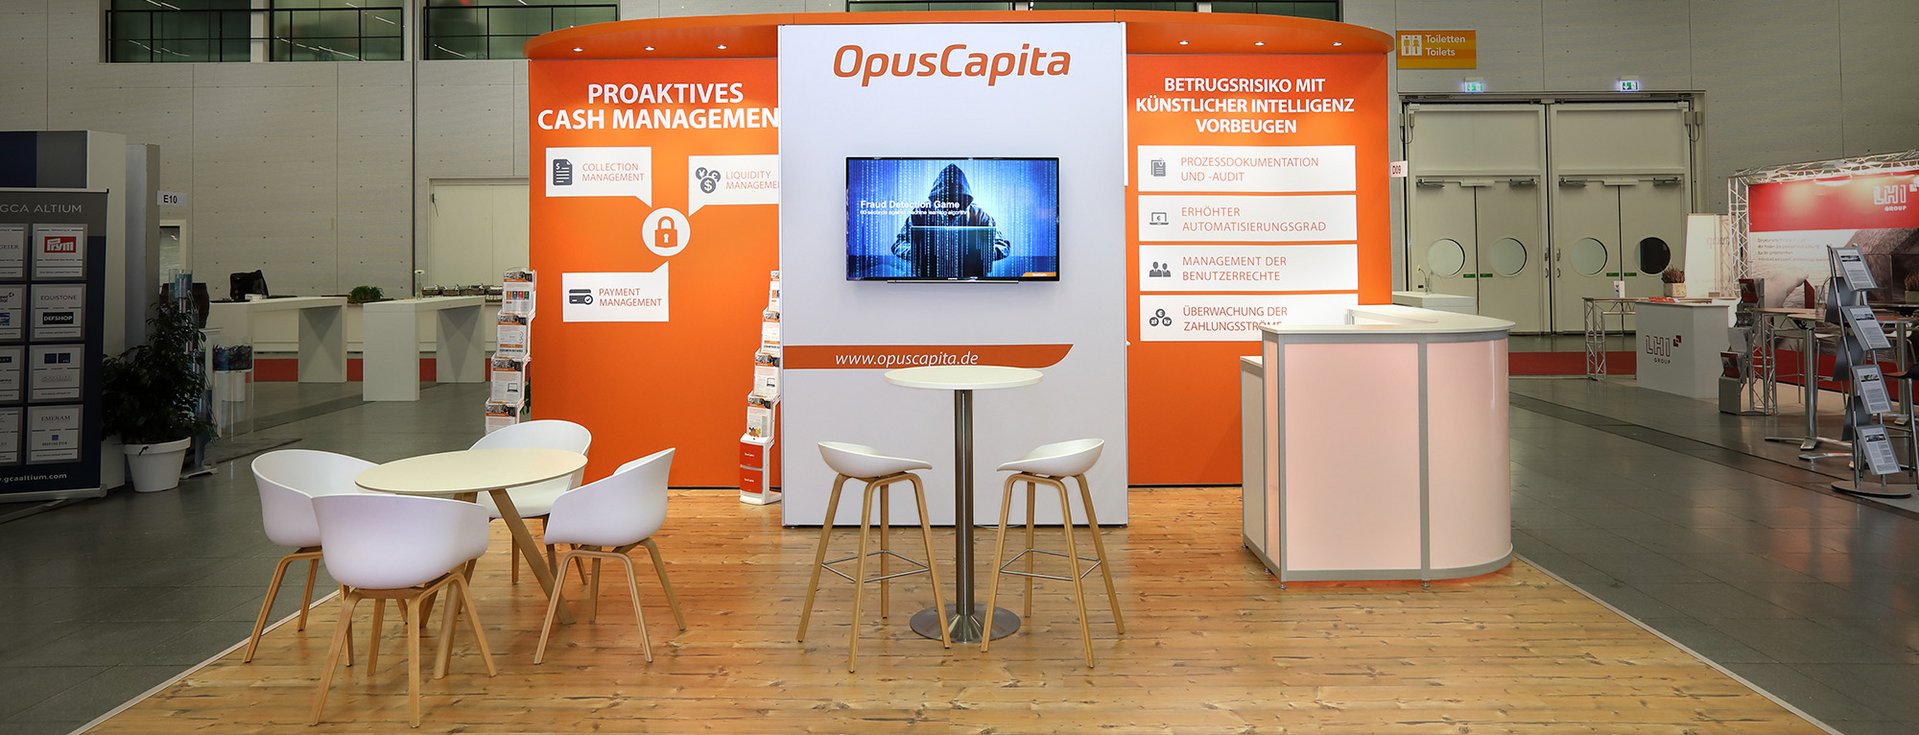 OpusCapita GmbH